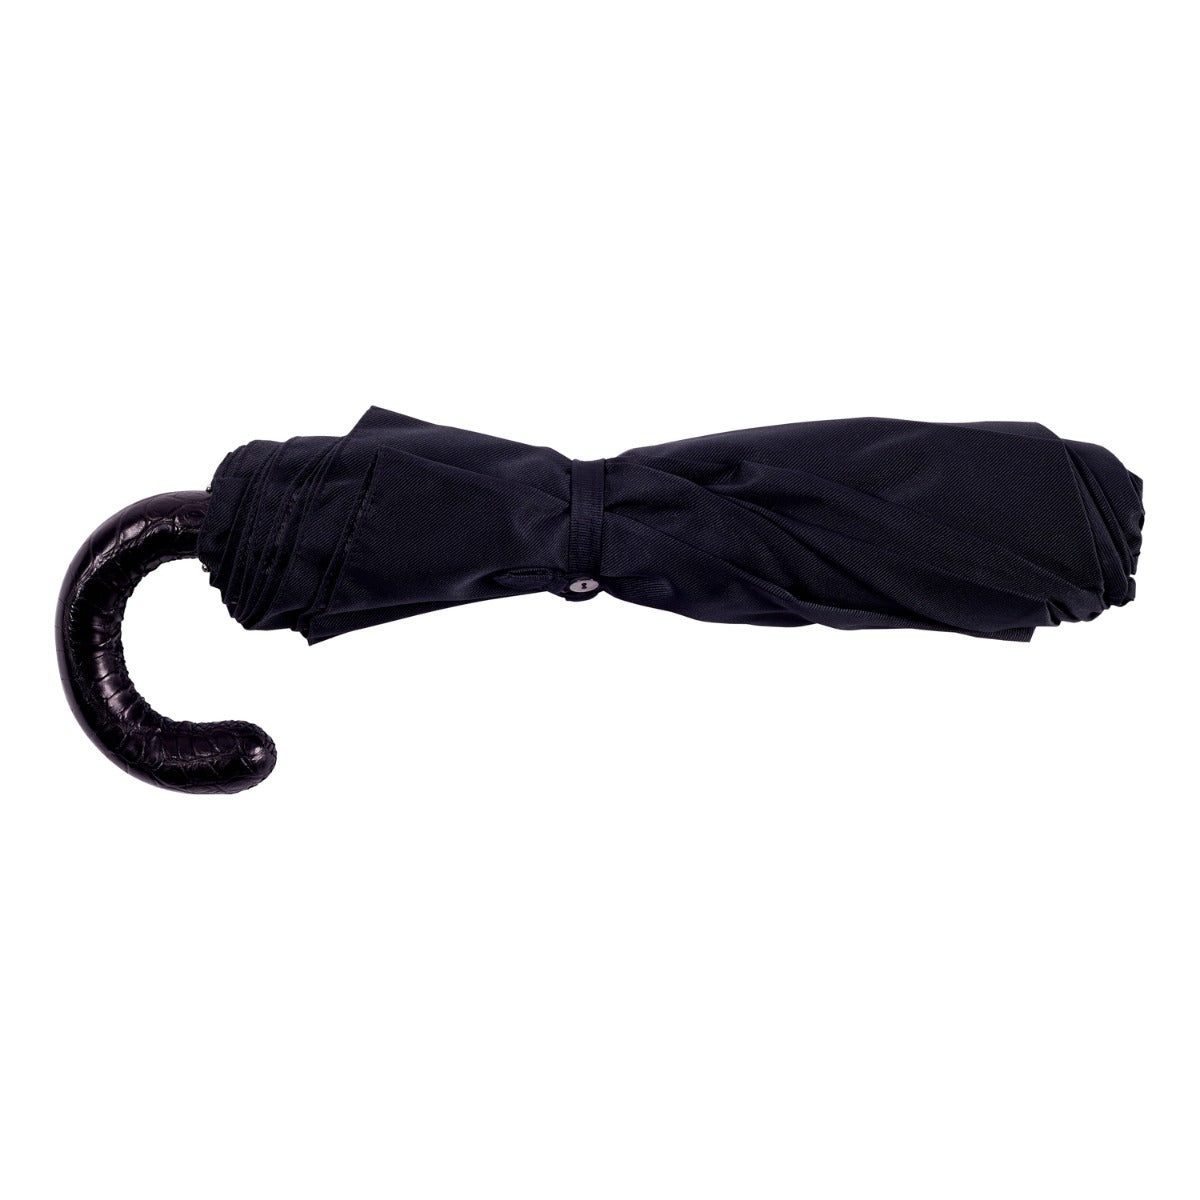 A KirbyAllison.com Black Alligator Travel Umbrella with Black Canopy.